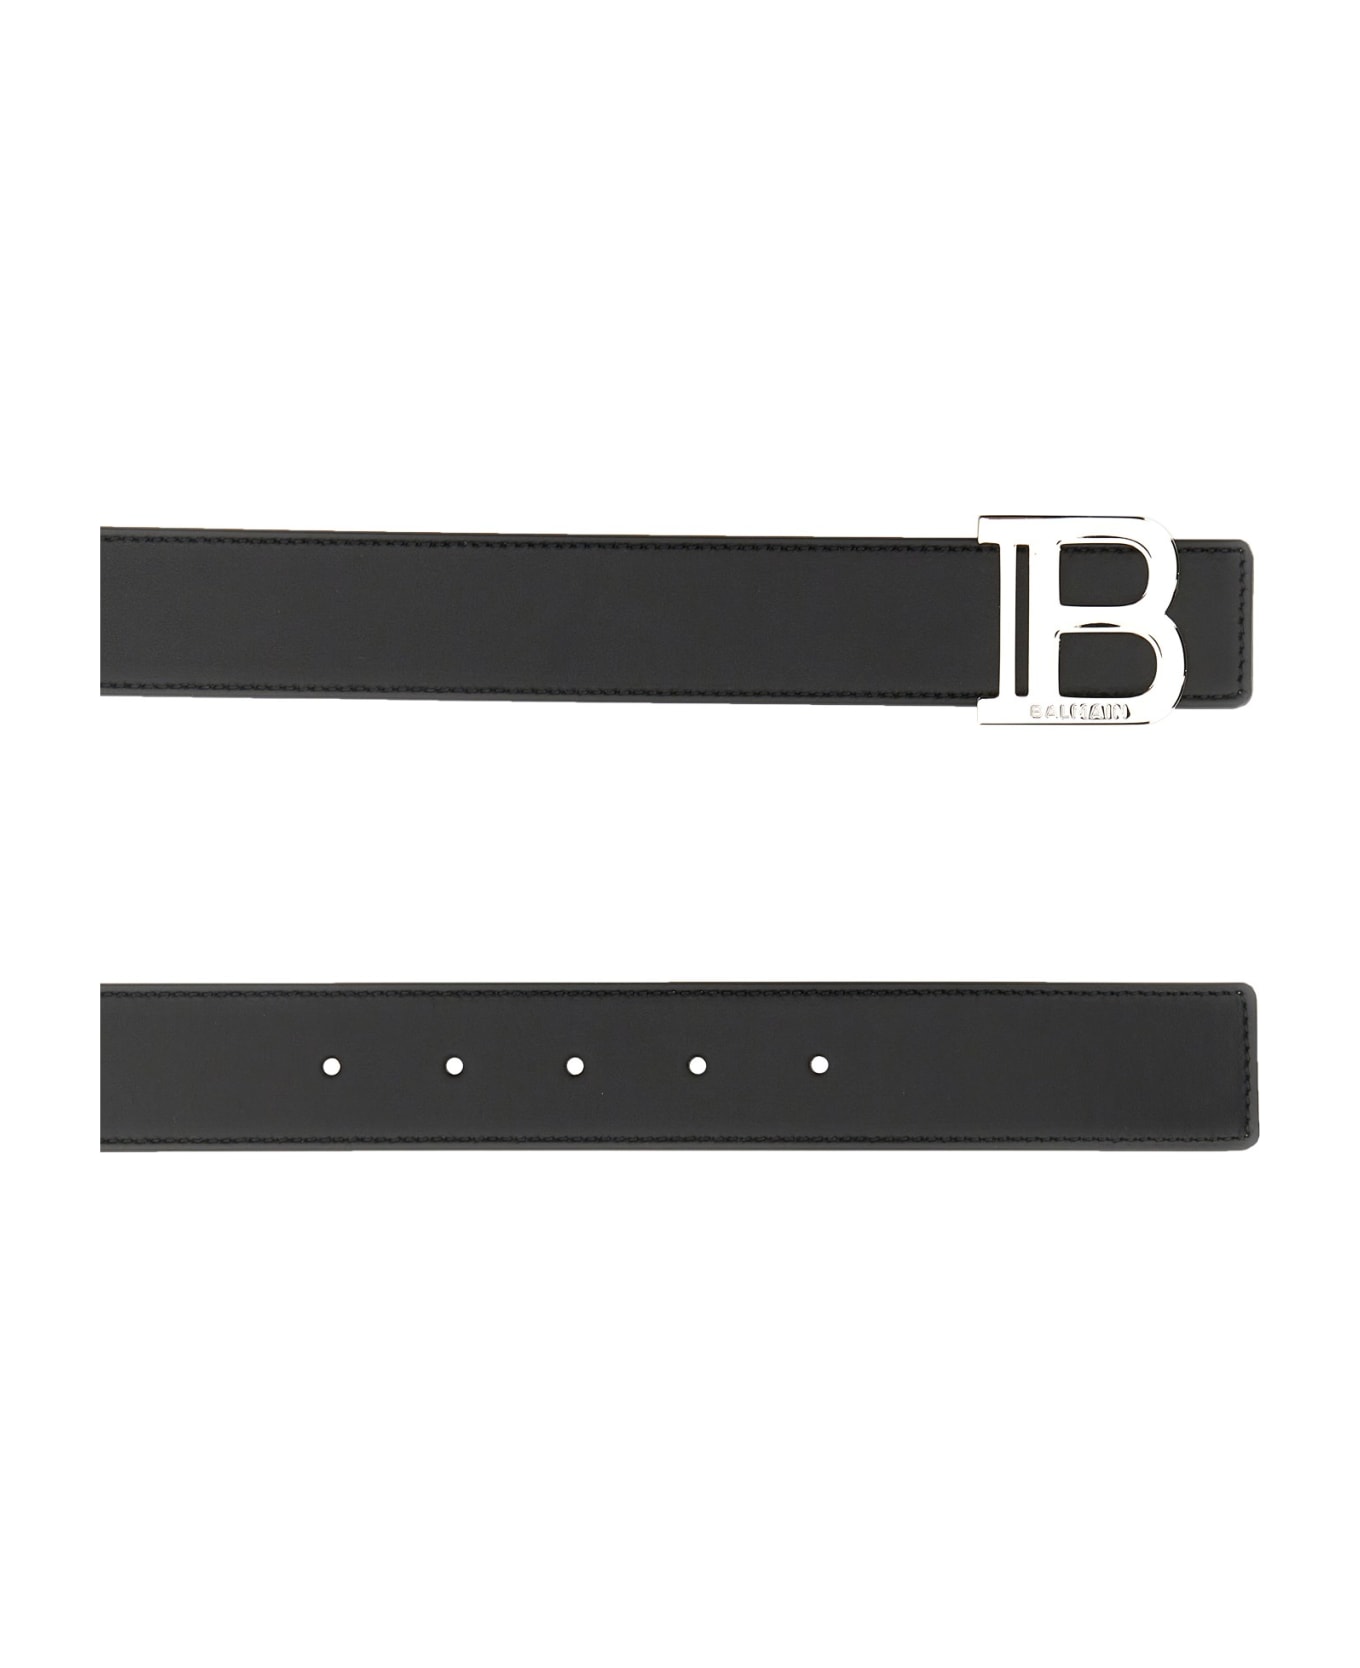 Balmain Leather Belt - NERO